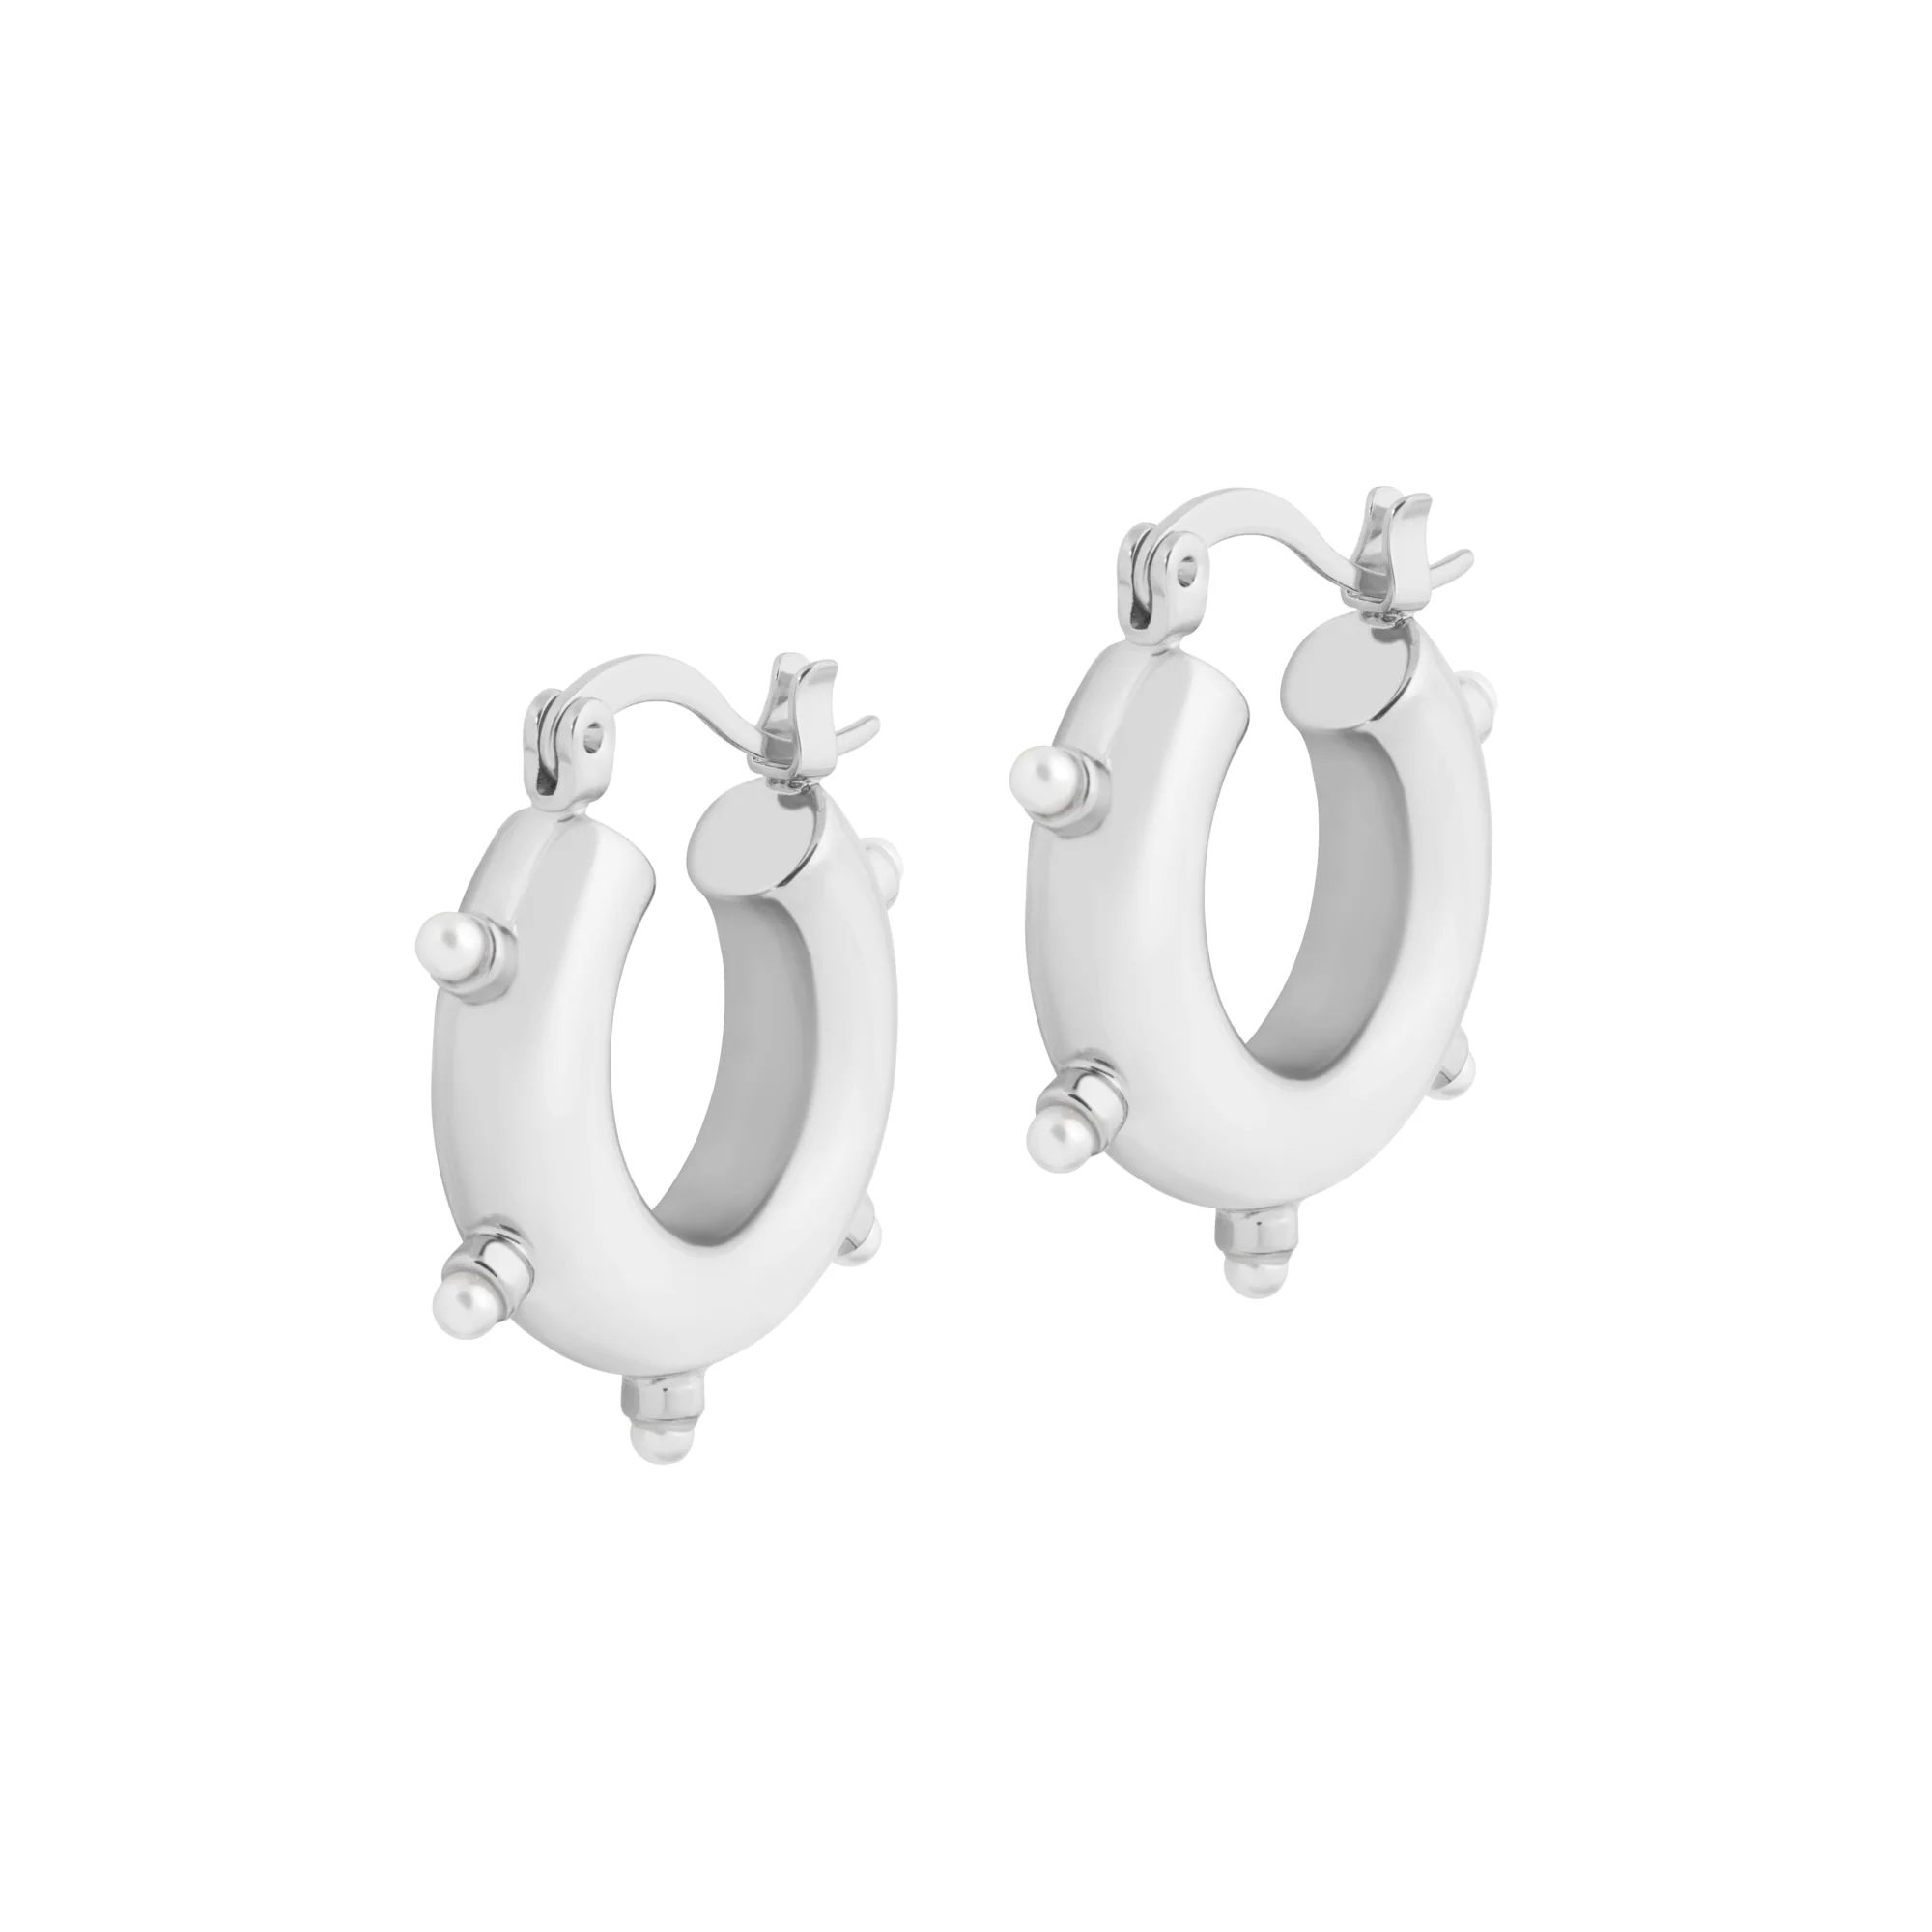 Reese Earrings | Electric Picks Jewelry